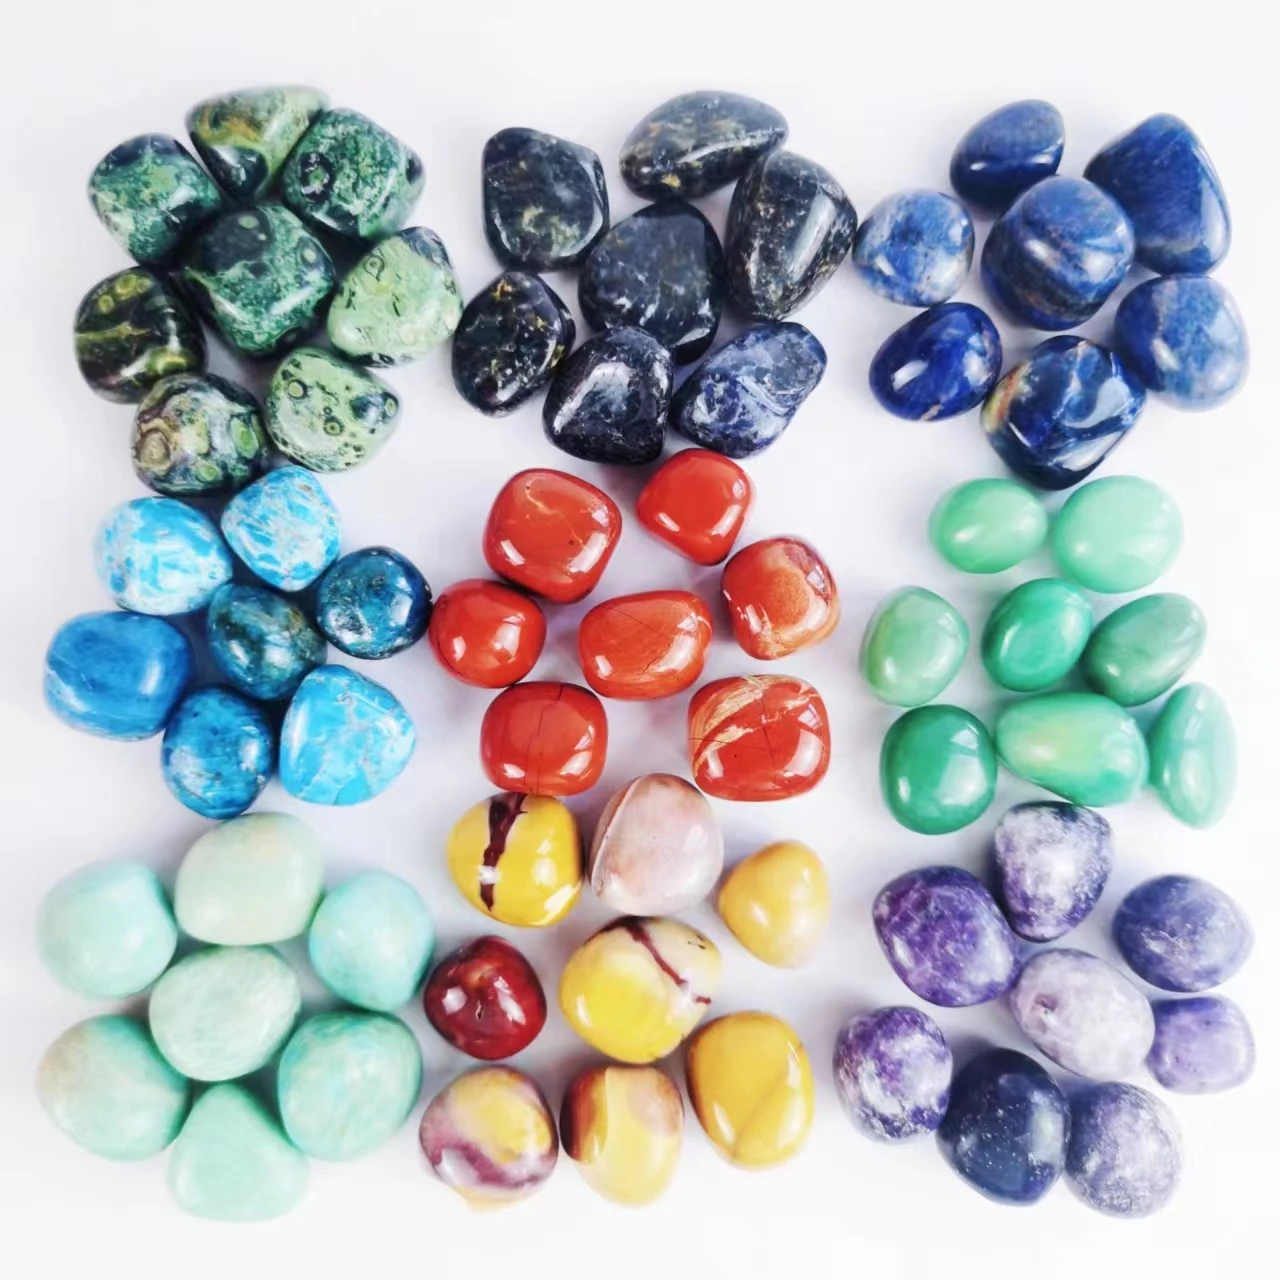 

Natural Gemstone Crystals Healing Stones Variety Reiki Clear Rose Quartz Amethyst Crystal Tumble Stone